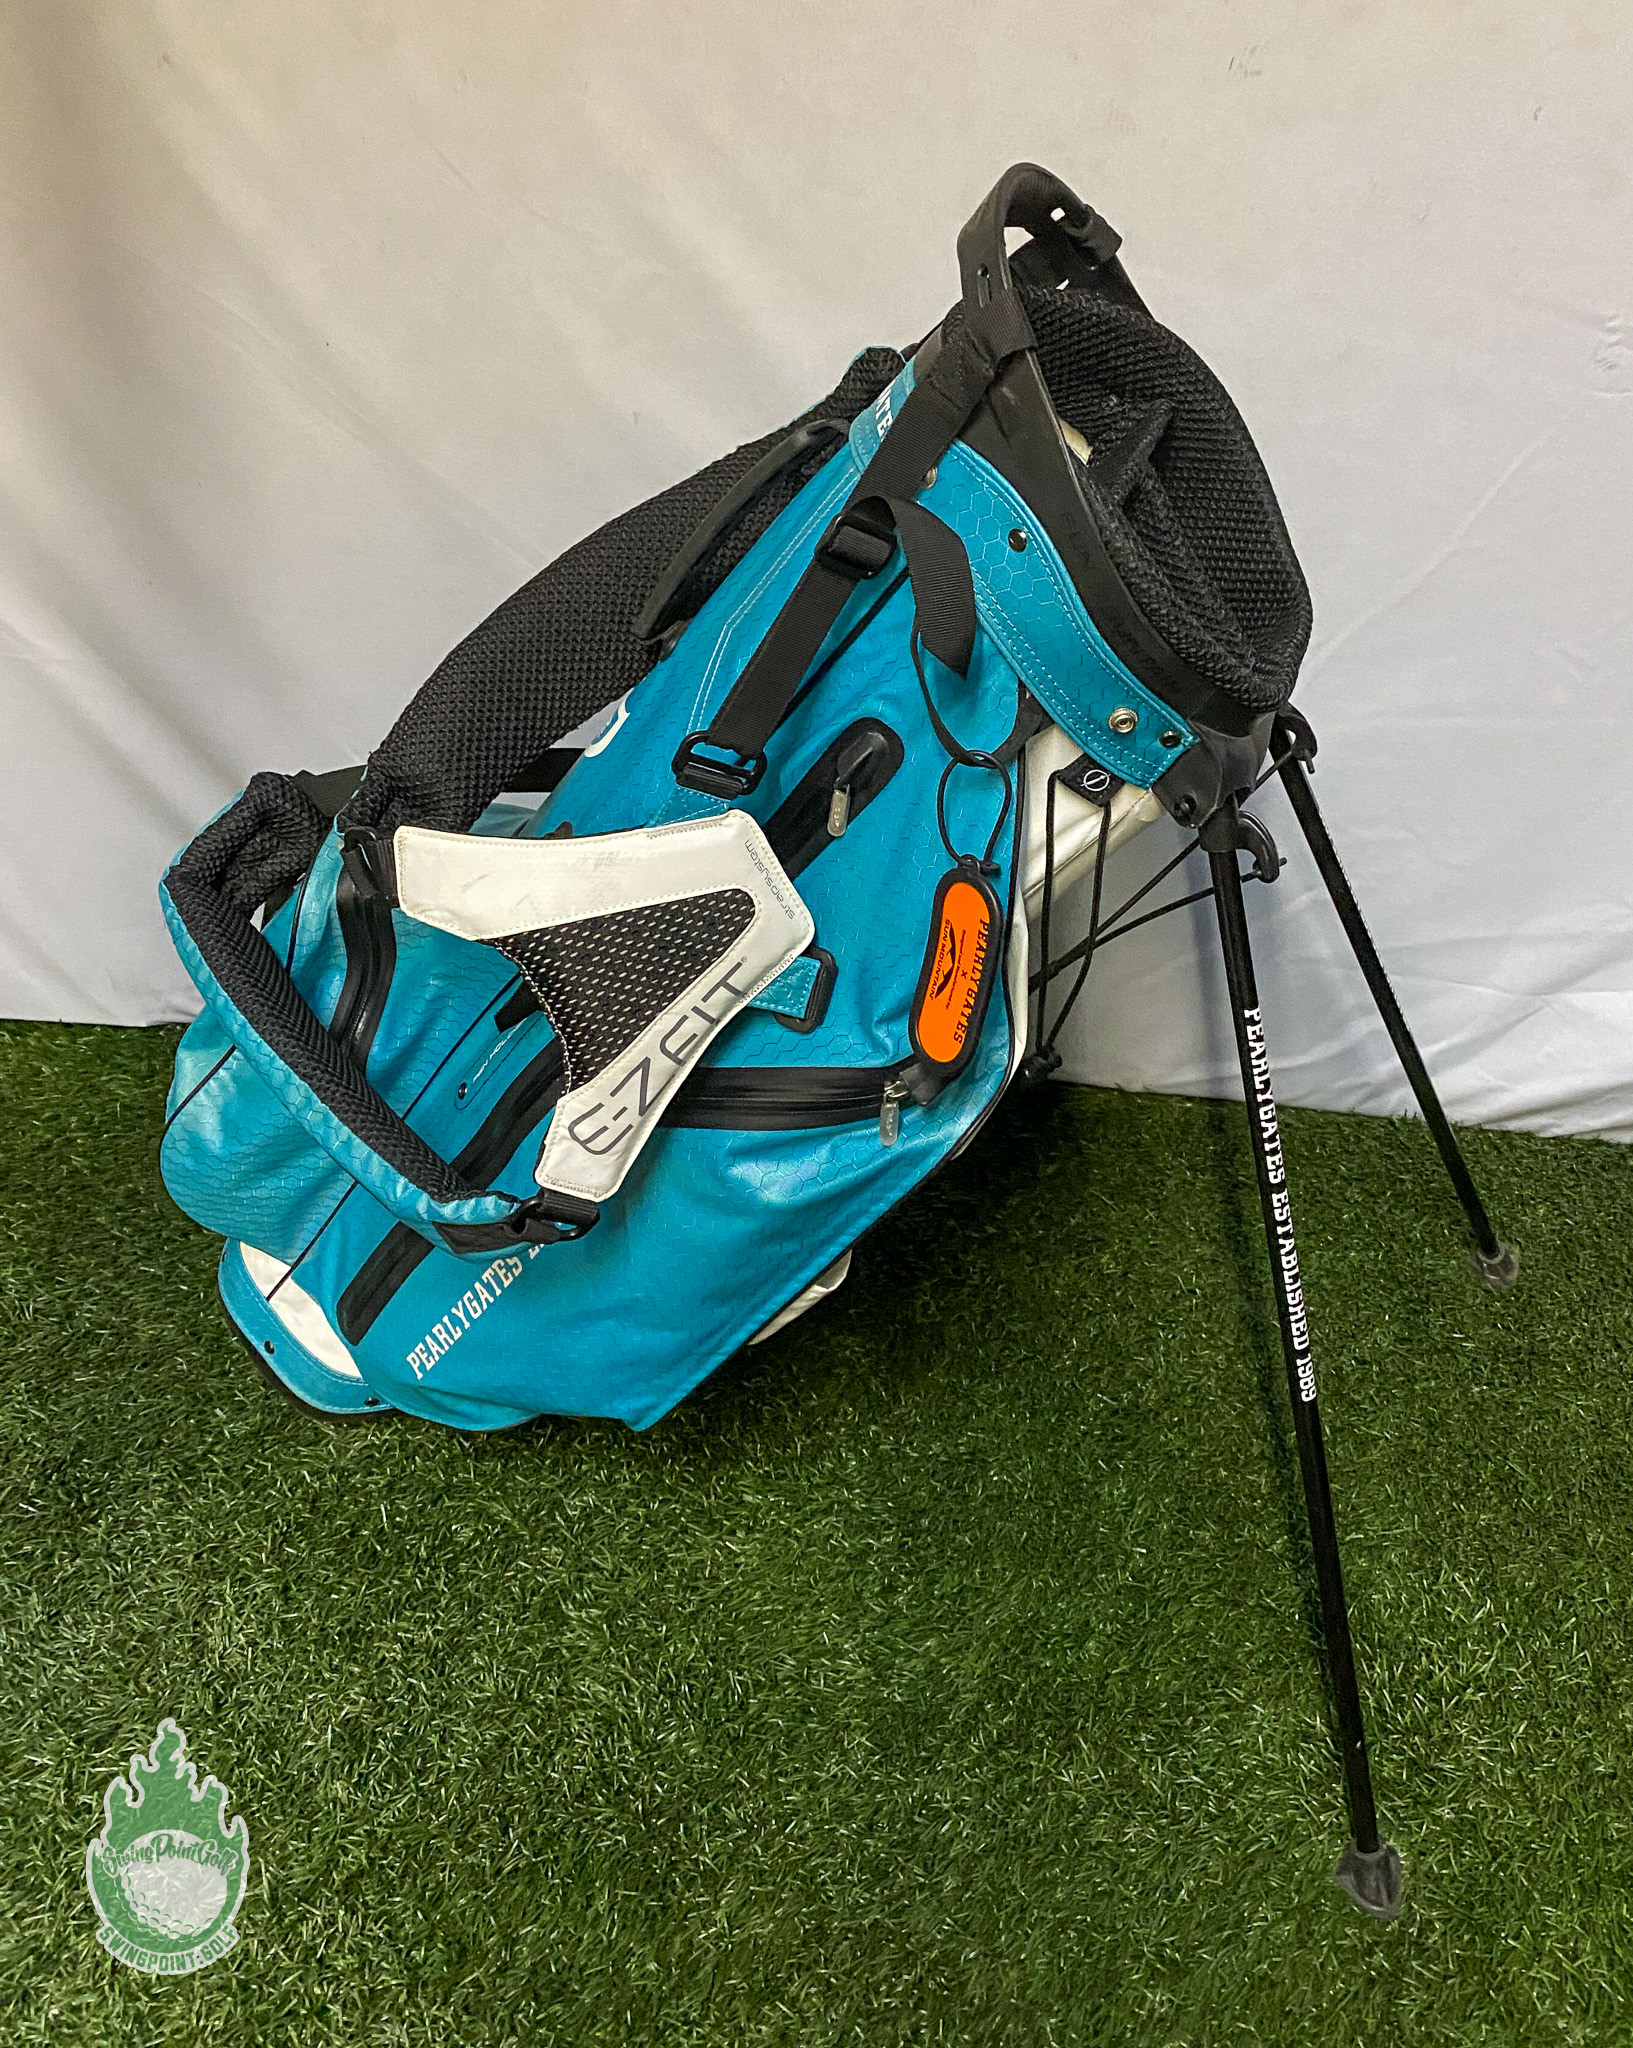 Pearly gate Golf bag equipment high quality golf clubs bag UNISEX